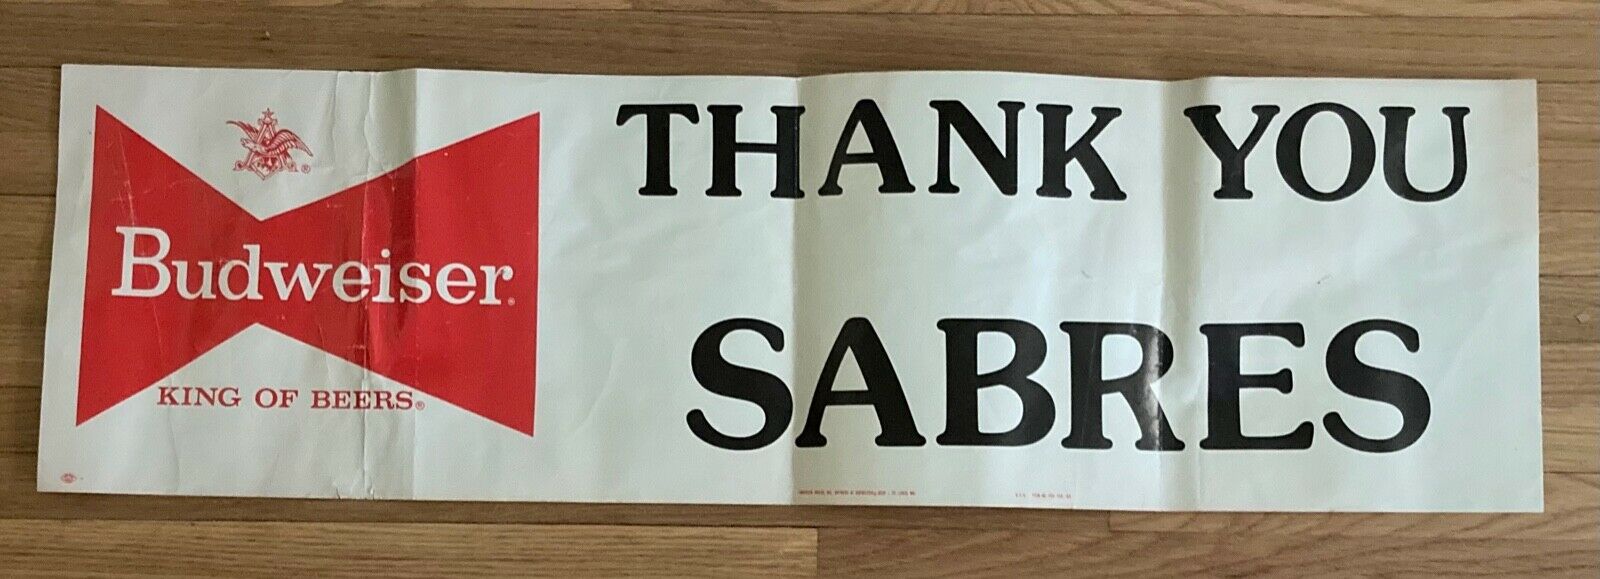 Vintage Thank You Sabres Nhl Hockey Budweiser Poster / Sign - Rare!